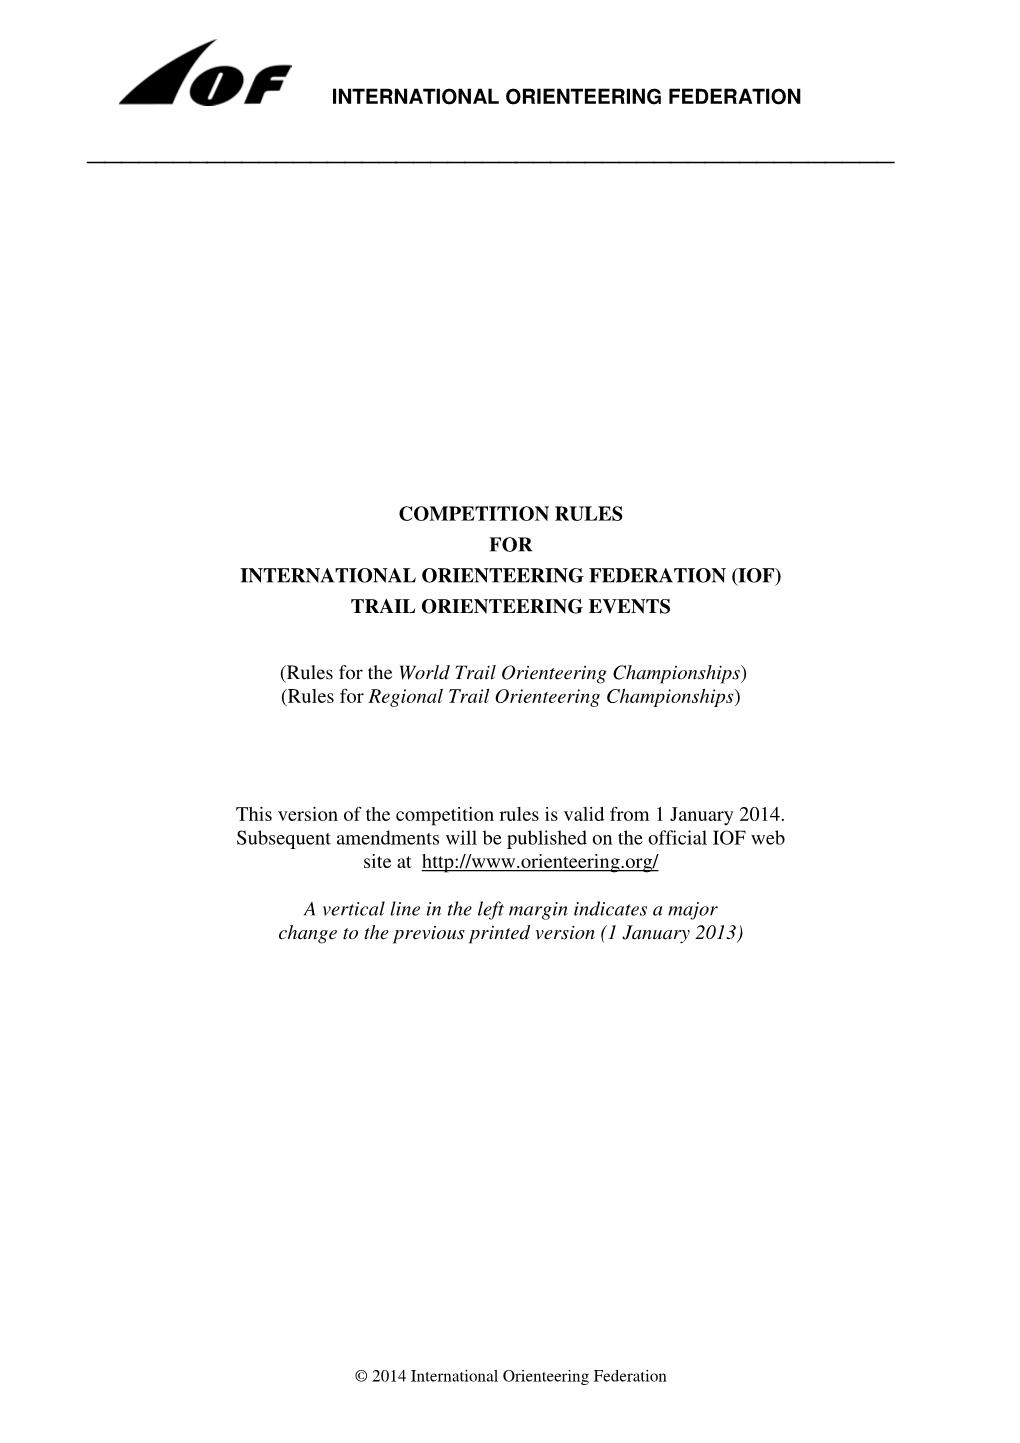 International Orienteering Federation COMPETITION RULES for INTERNATIONAL ORIENTEERING FEDERATION (IOF) TRAIL ORIENTEERING EVENTS